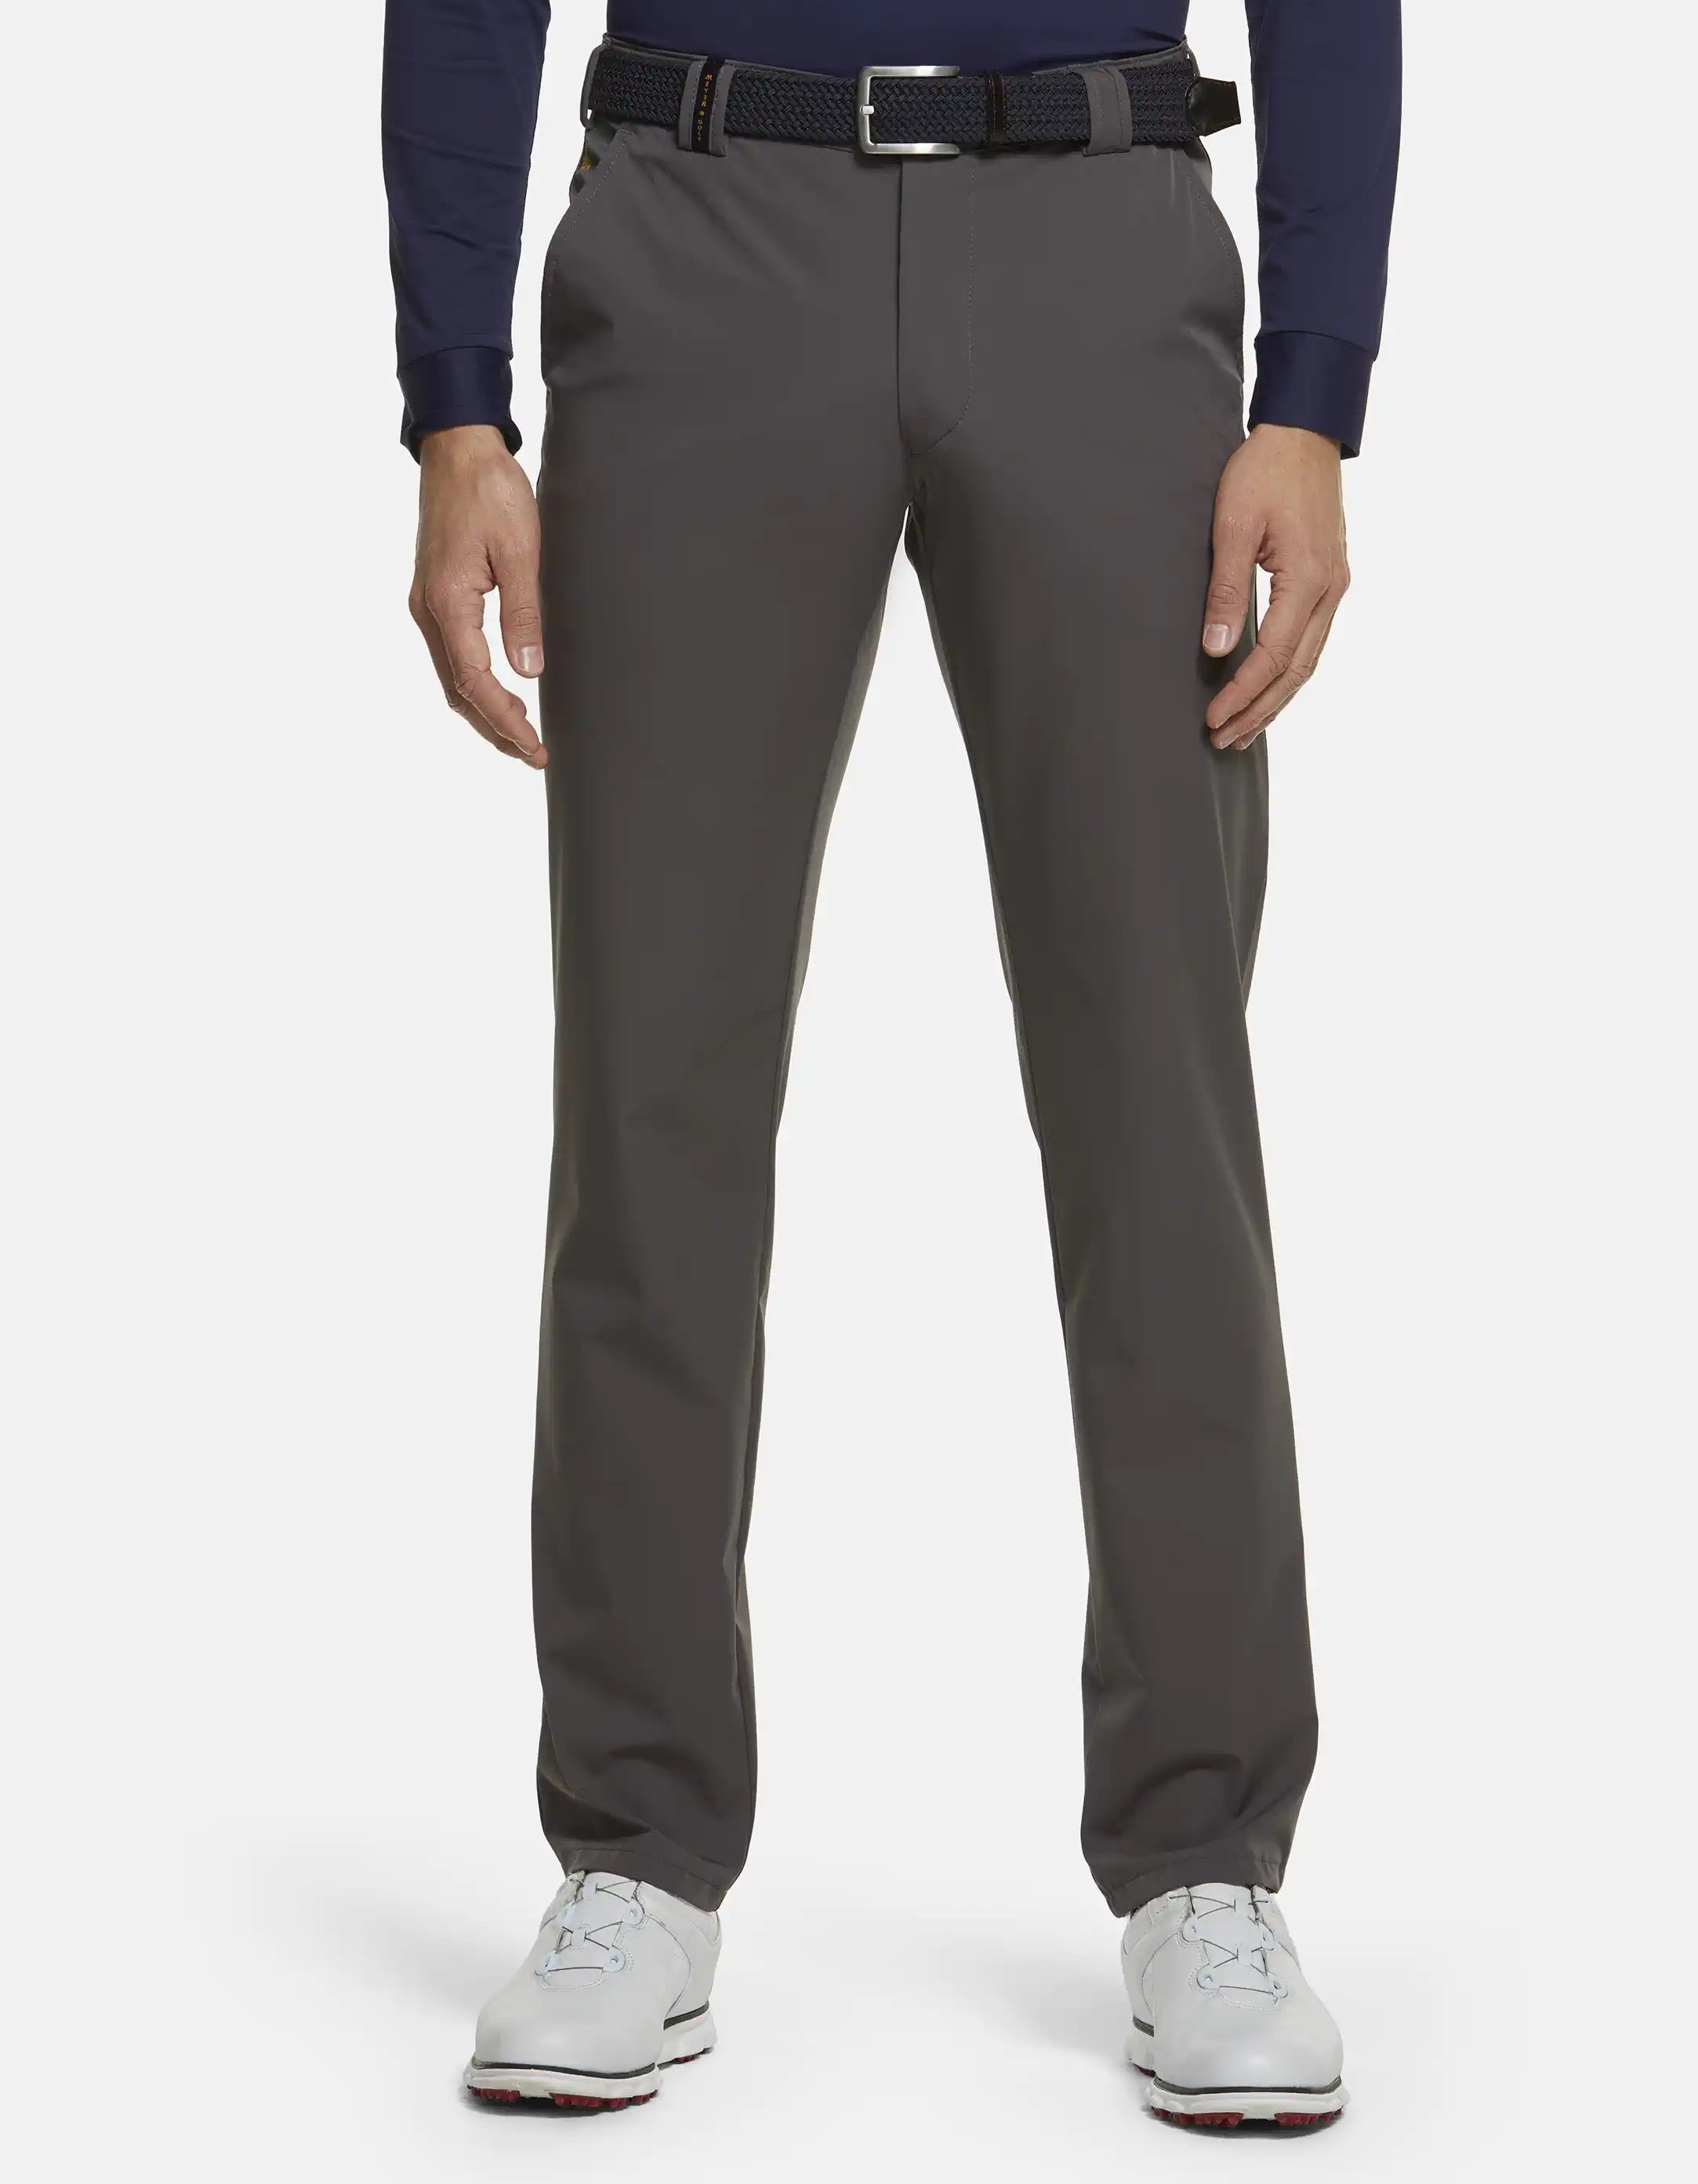 MEYER Golf Trousers - Augusta 8070 High Performance Chinos - Dark Grey